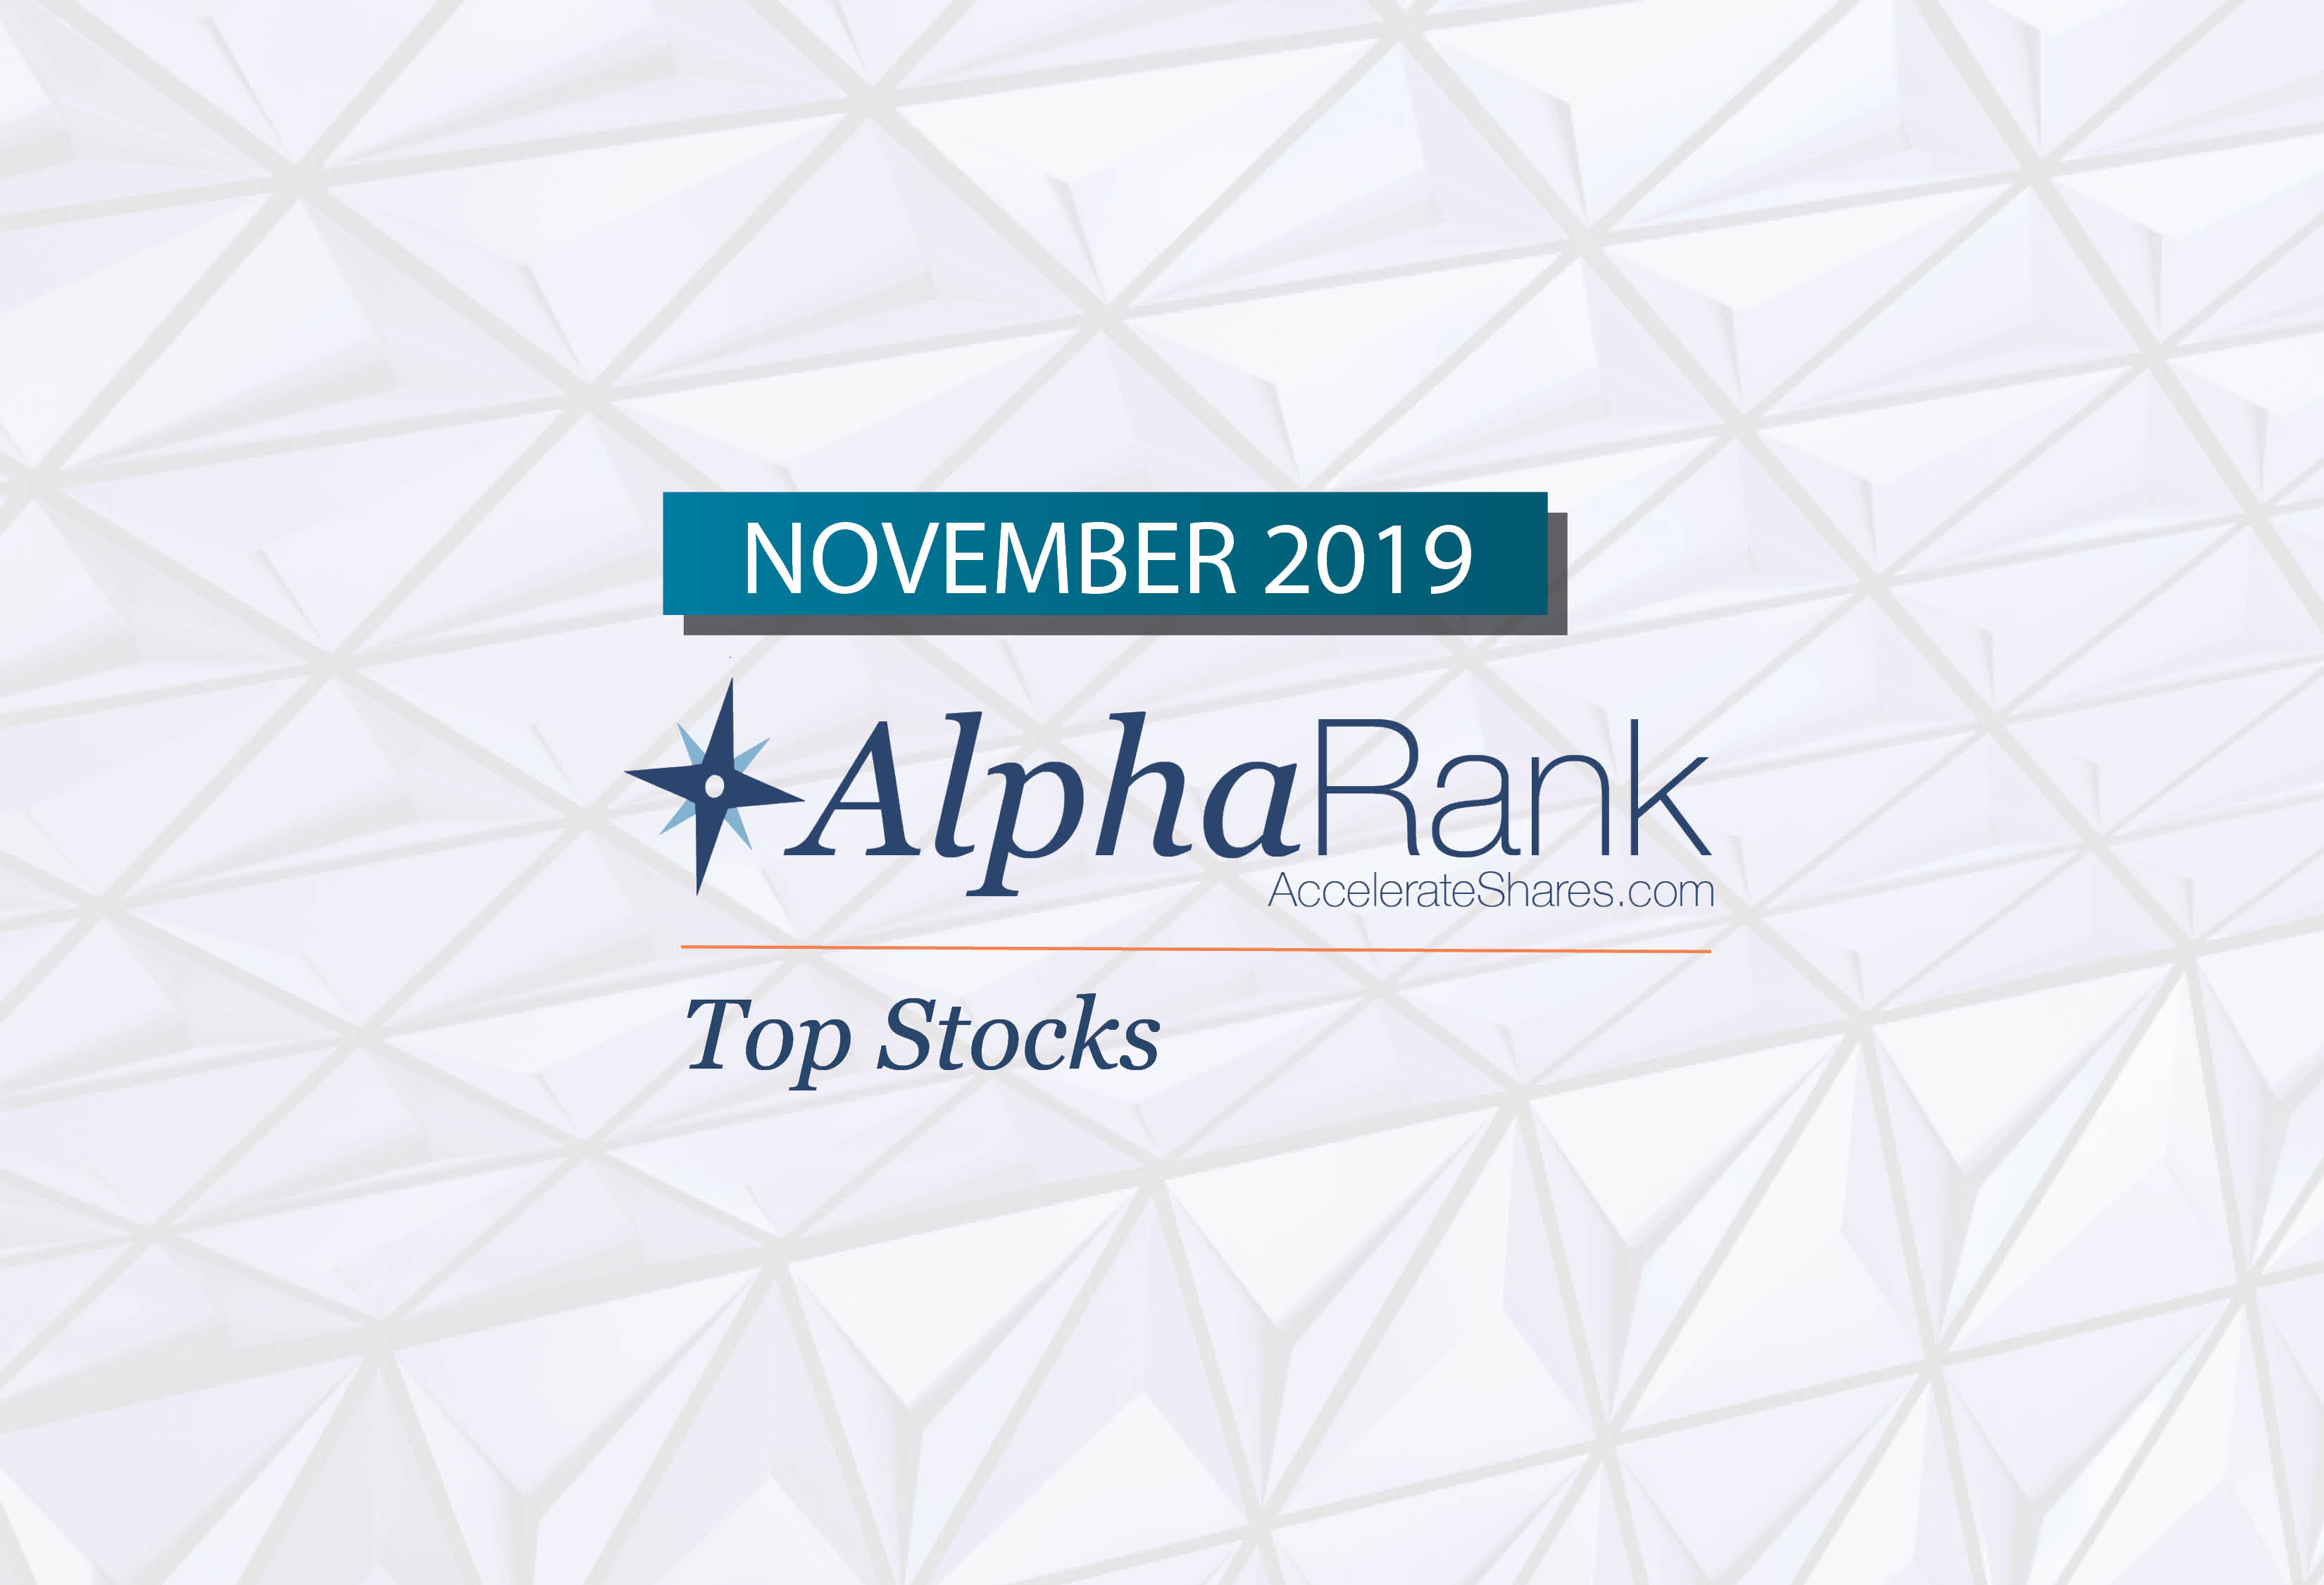 AlphaRank Top Stocks—November 2019